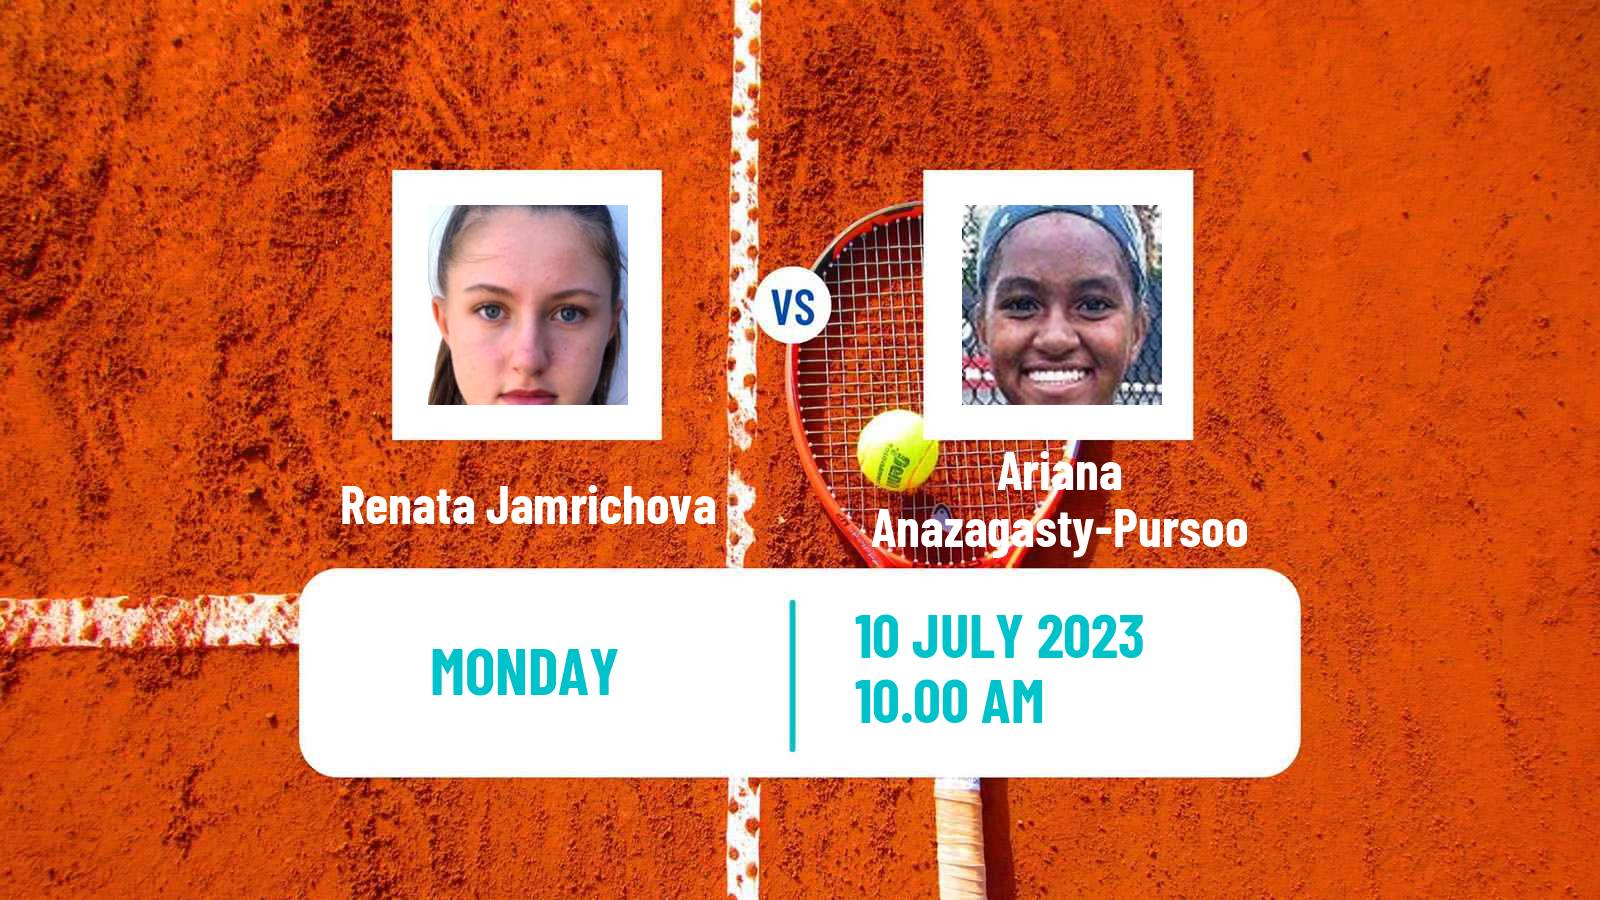 Tennis Girls Singles Wimbledon Renata Jamrichova - Ariana Anazagasty-Pursoo